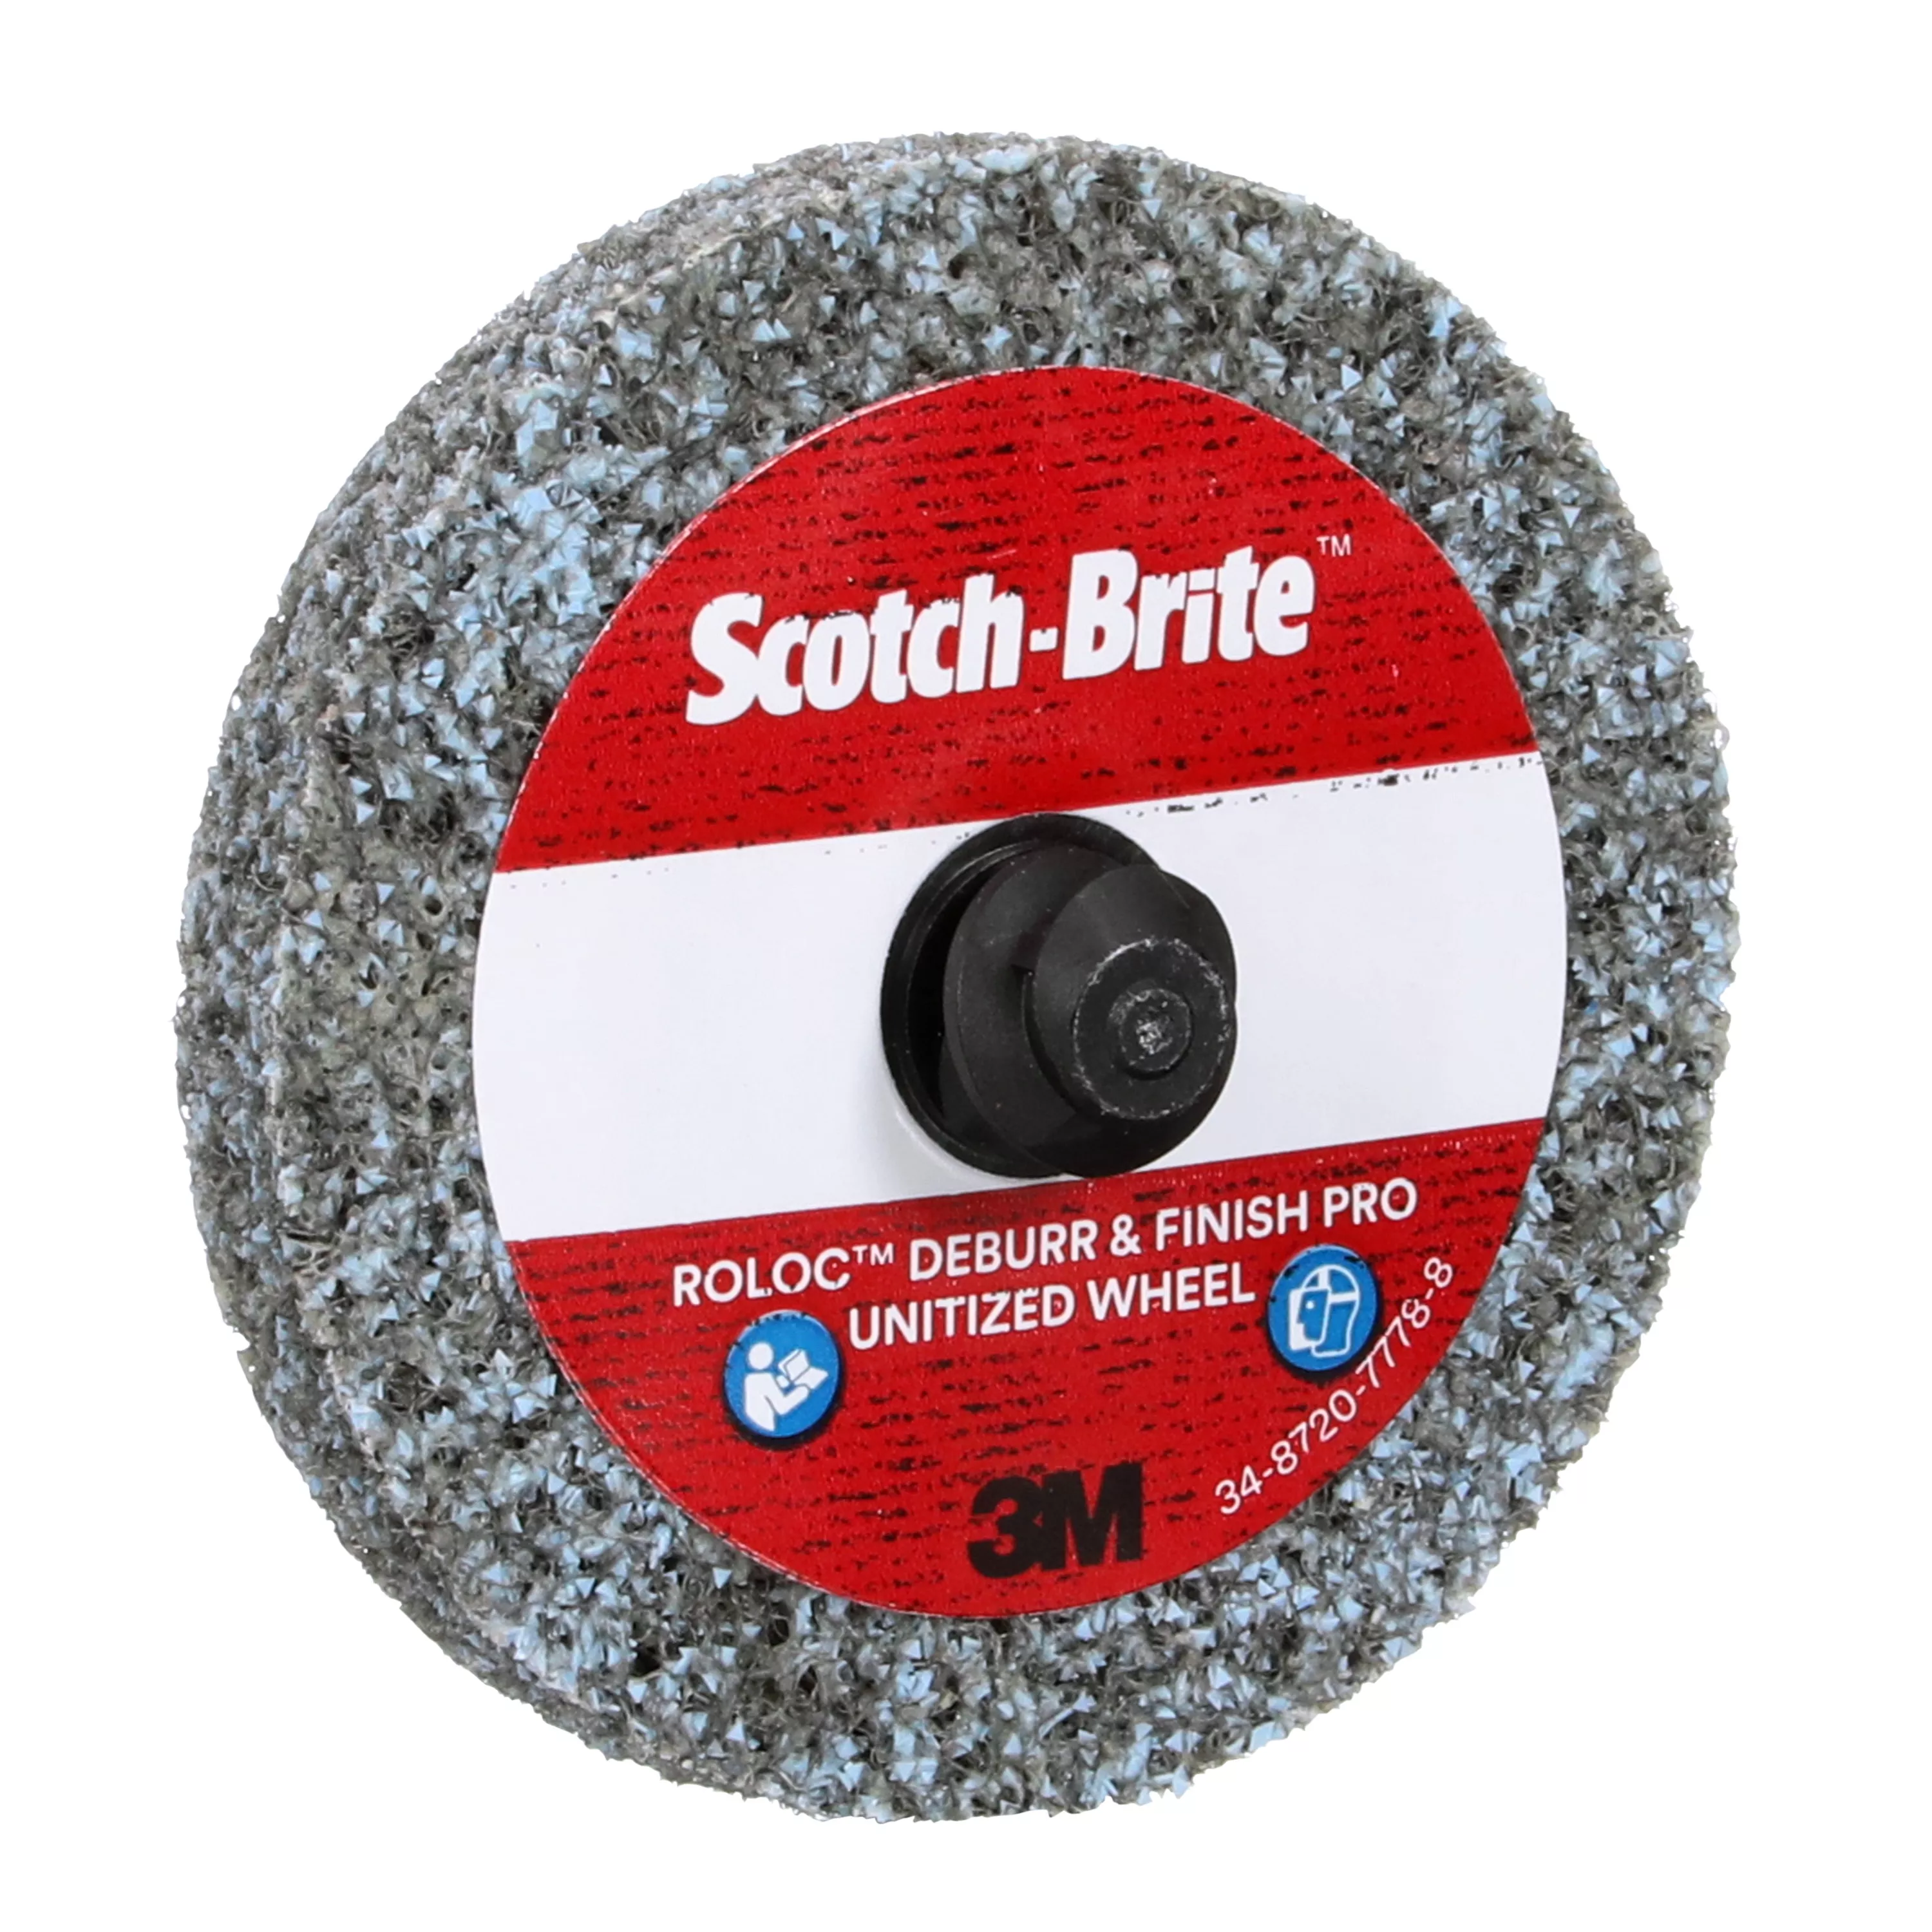 UPC 00068060659095 | Scotch-Brite™ Roloc™ Deburr & Finish PRO Unitized Wheel